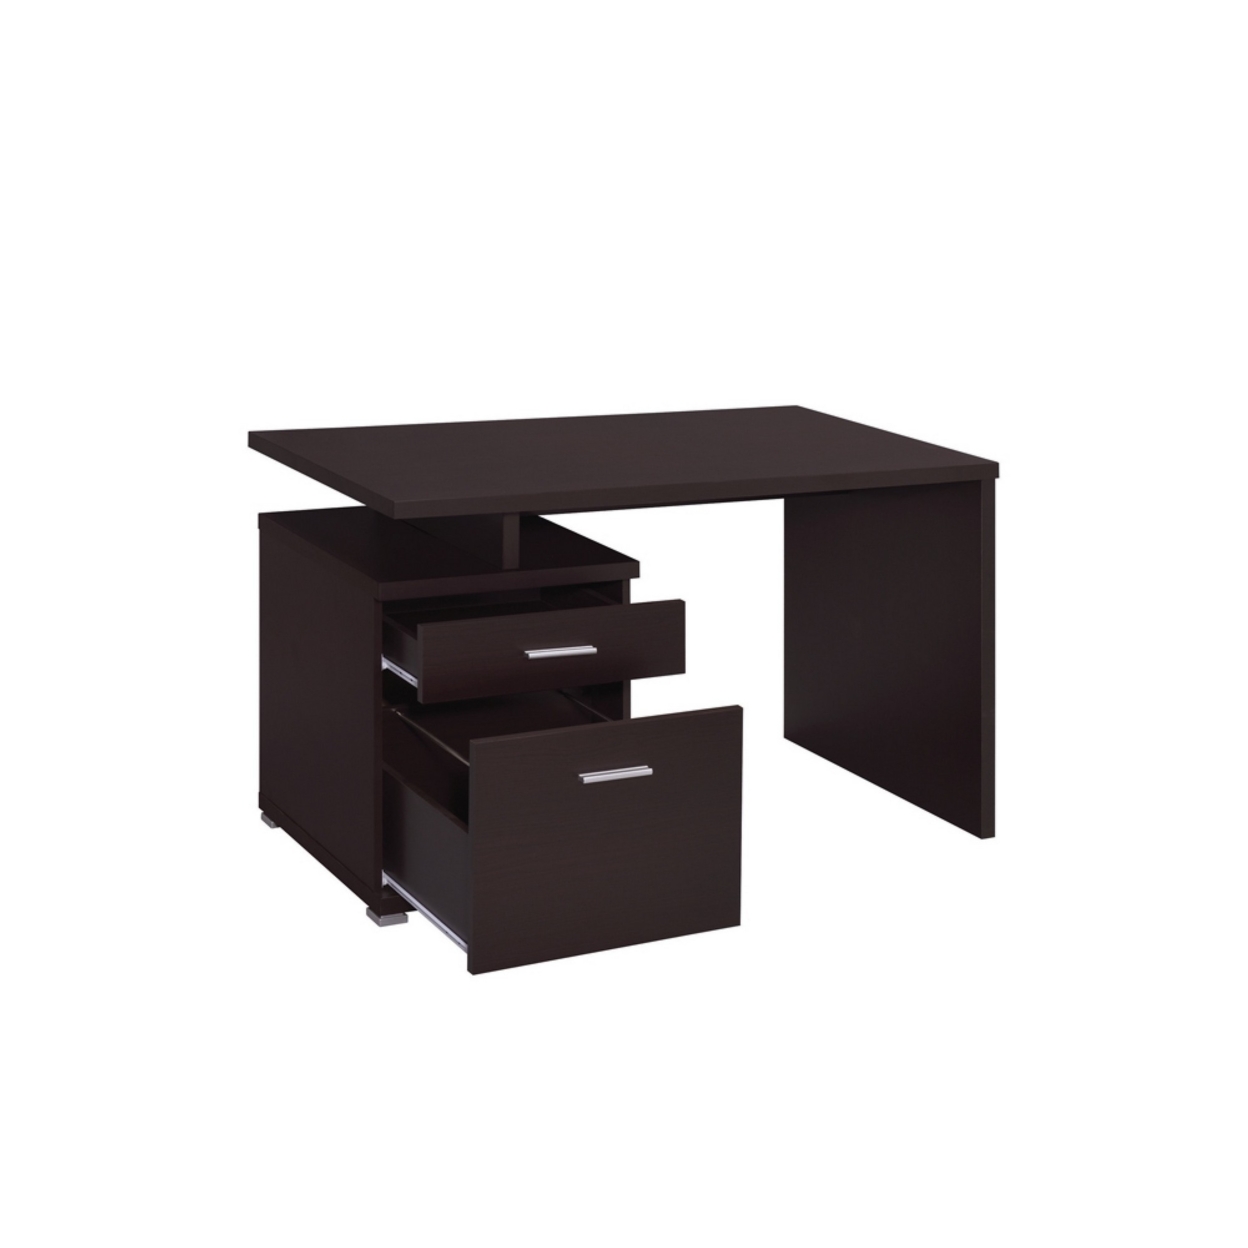 Wooden Contemporary Desk With Cabinet, Brown- Saltoro Sherpi